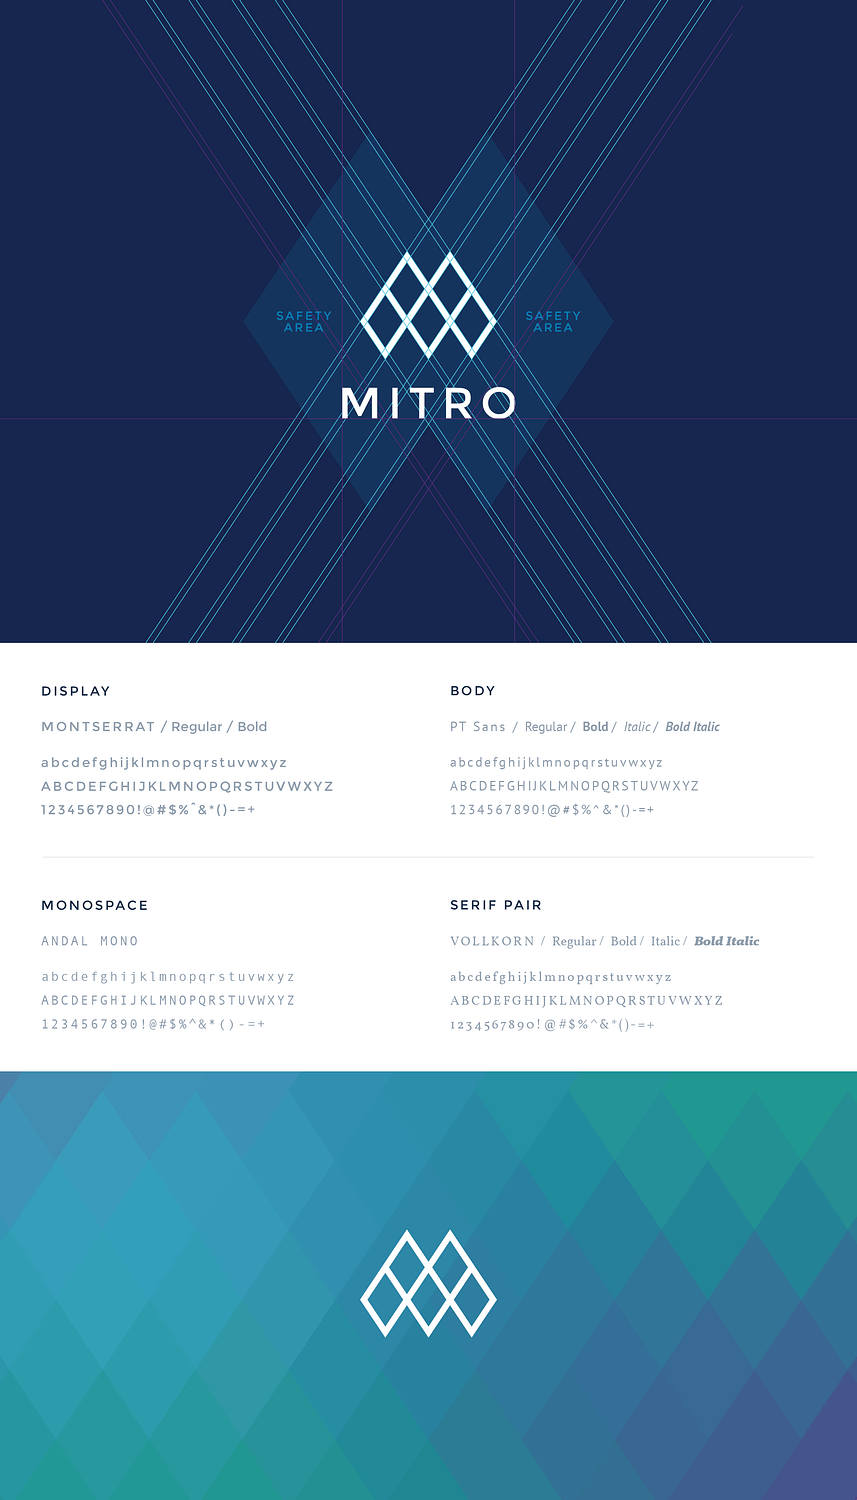 meng-he-mitro-brand-bottom